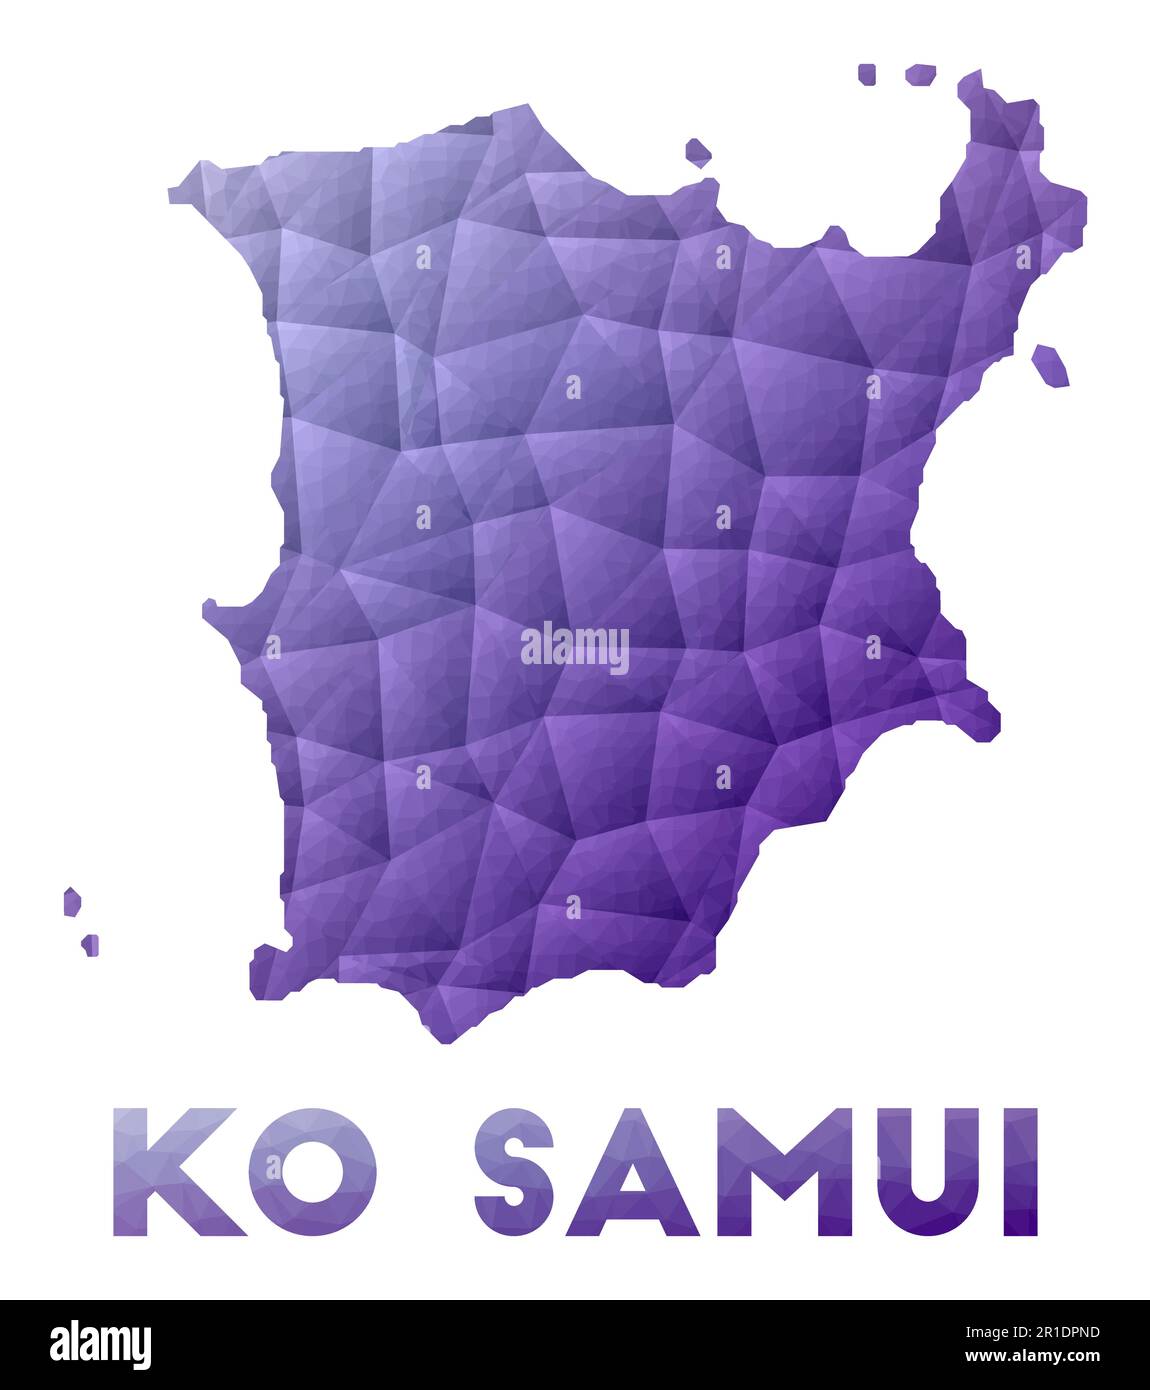 Map of Ko Samui. Low poly illustration of the island. Purple geometric design. Polygonal vector illustration. Stock Vector